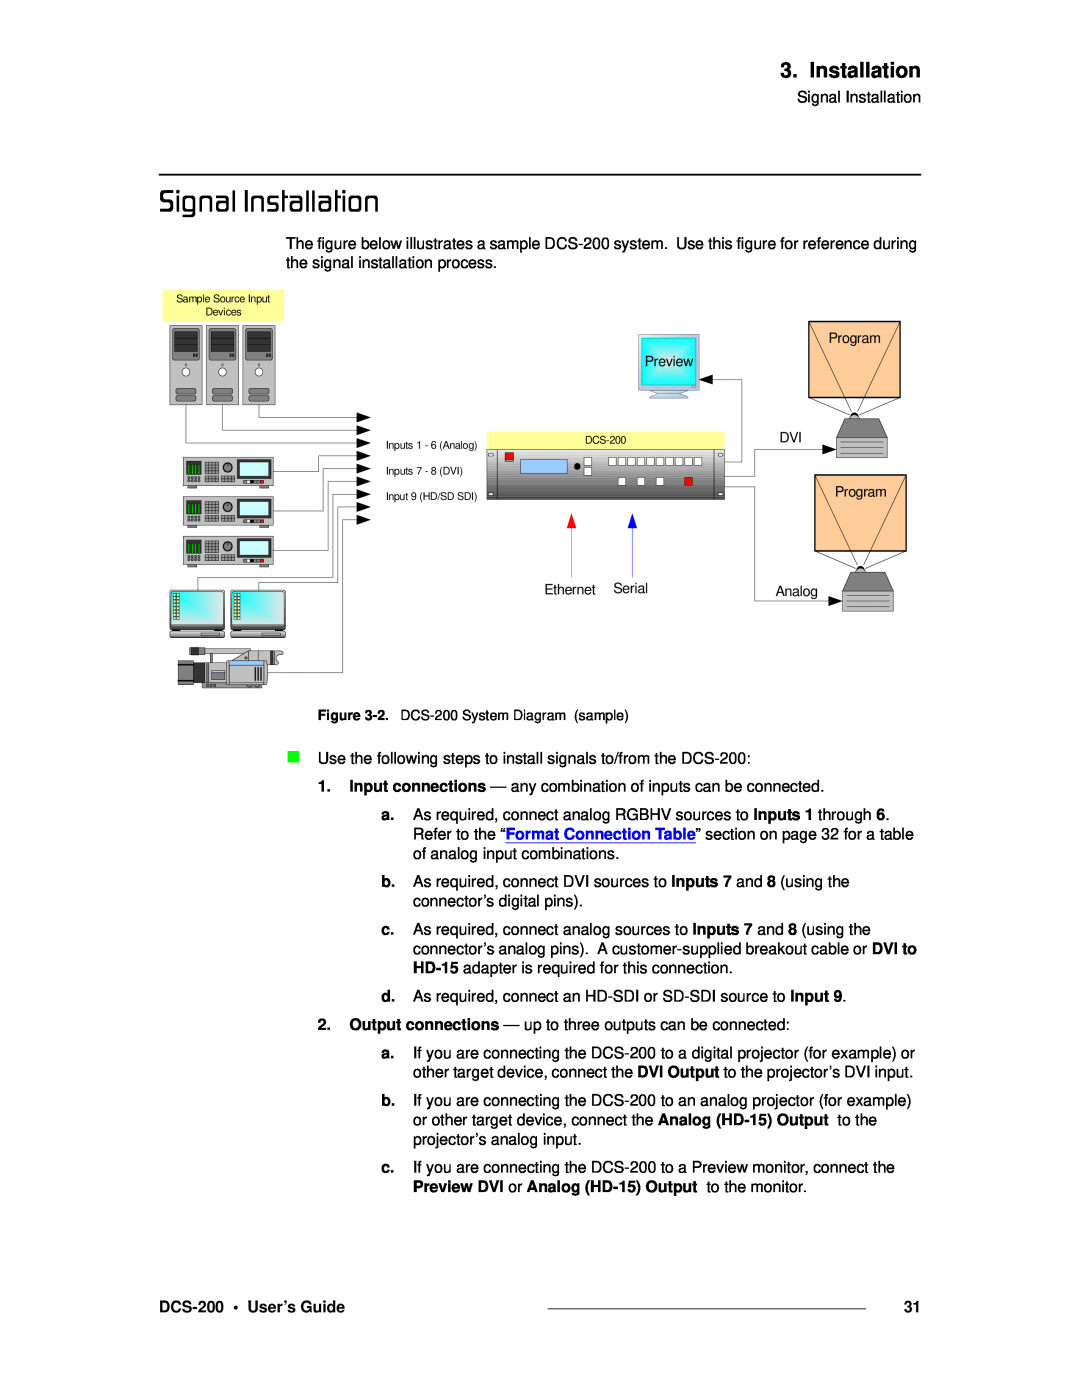 Barco manual páÖå~ä=fåëí~ää~íáçå, Installation, DCS-200 User’s Guide, Program DVI Program, Ethernet Serial 